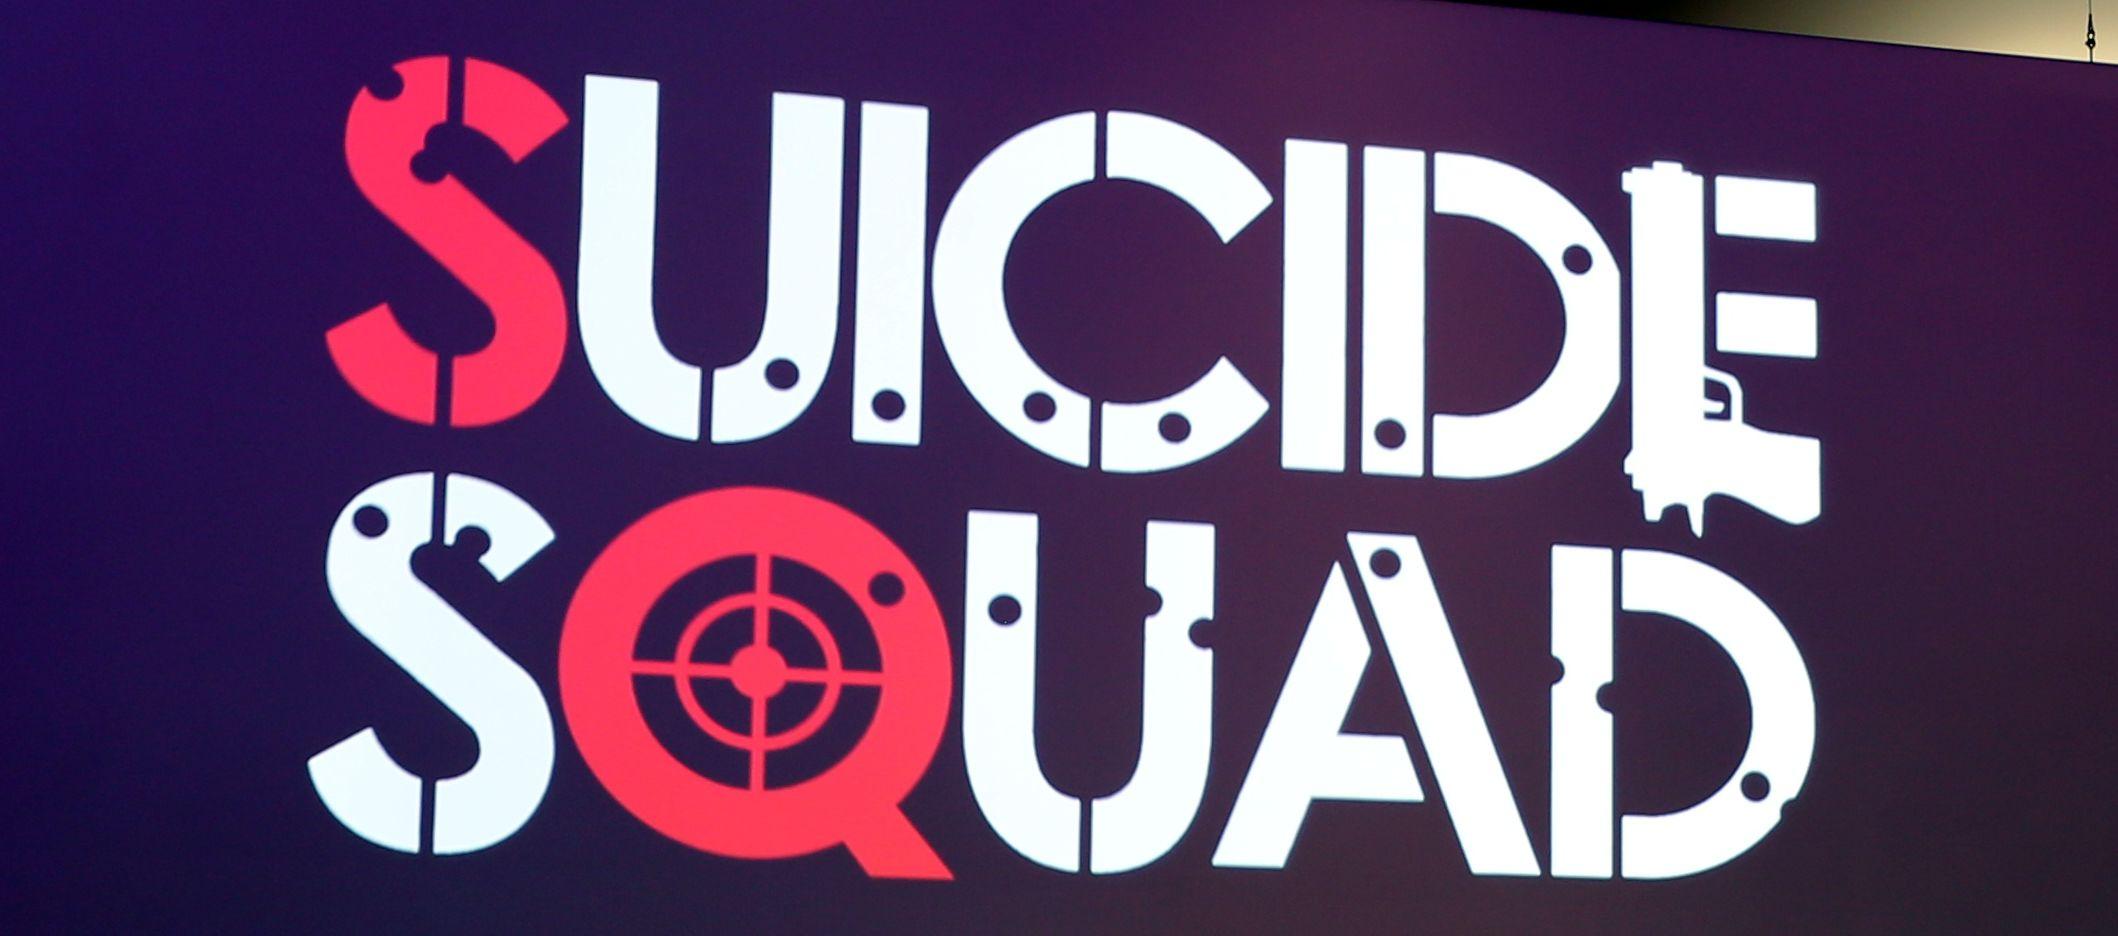 Cool Movie Logo - Suicide Squad Movie Logo Revealed